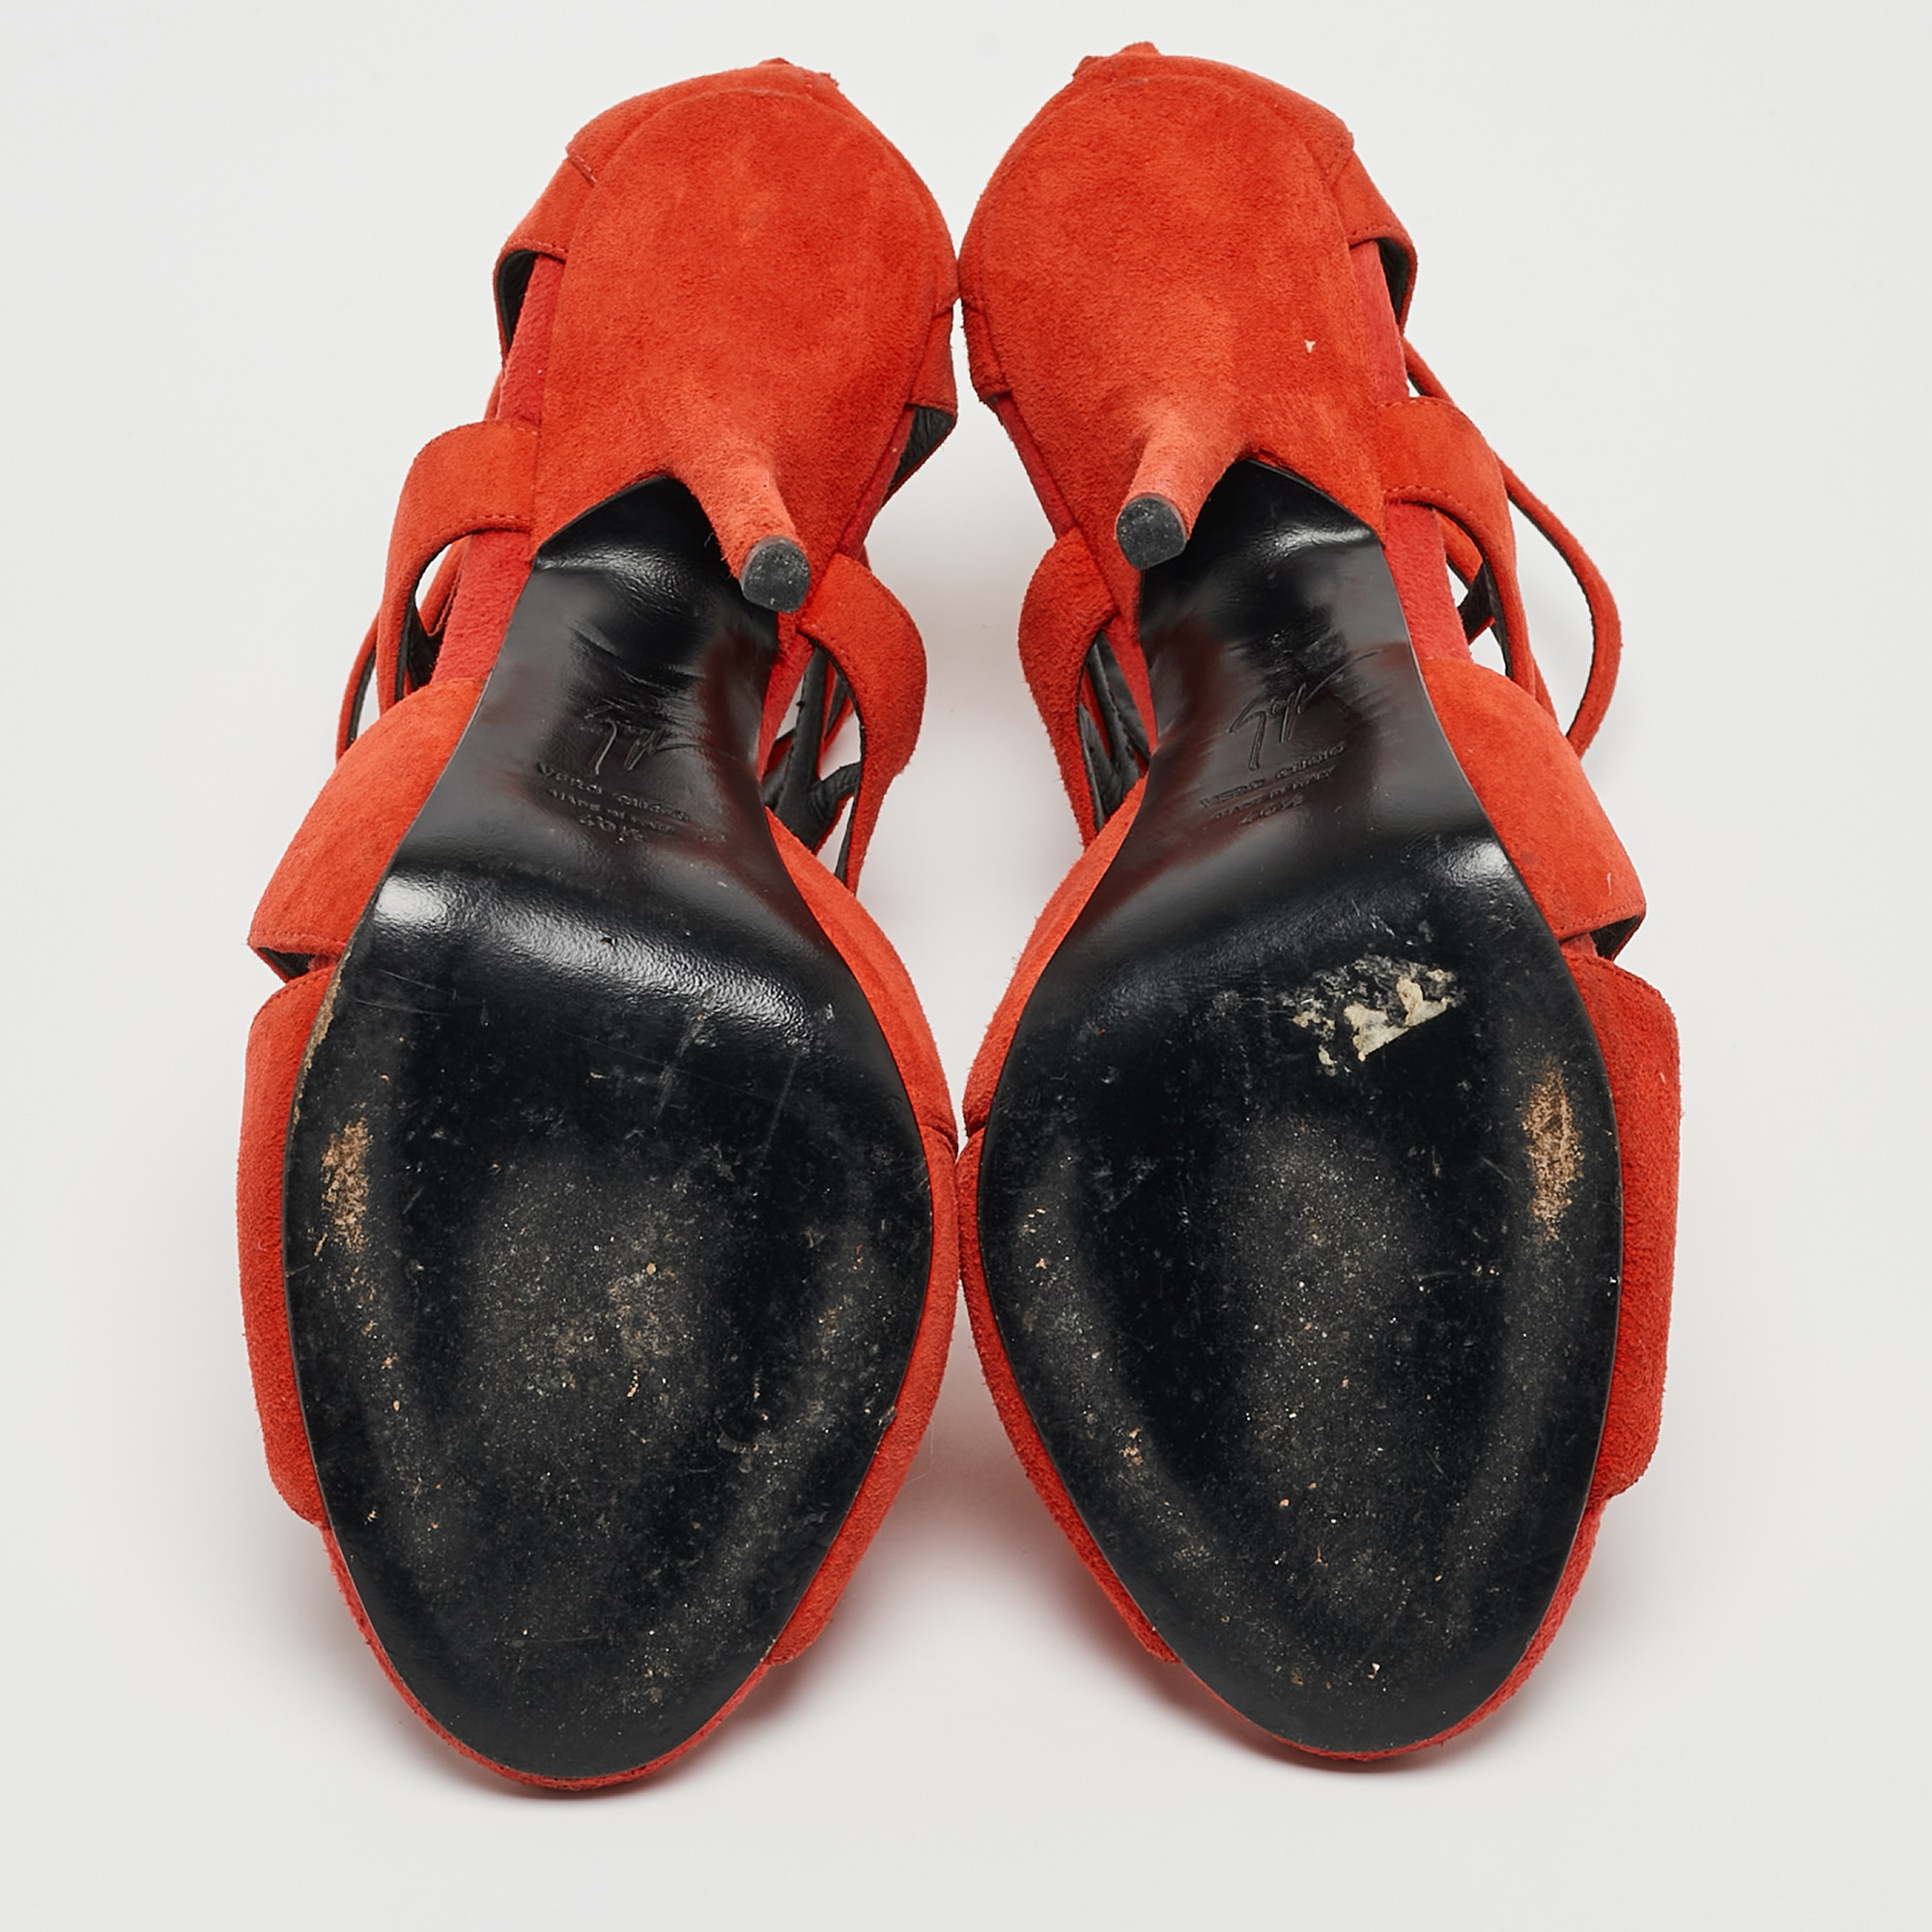 Giuseppe Zanotti Rust Orange Suede Cut Out Cage Sandals Size 40.5